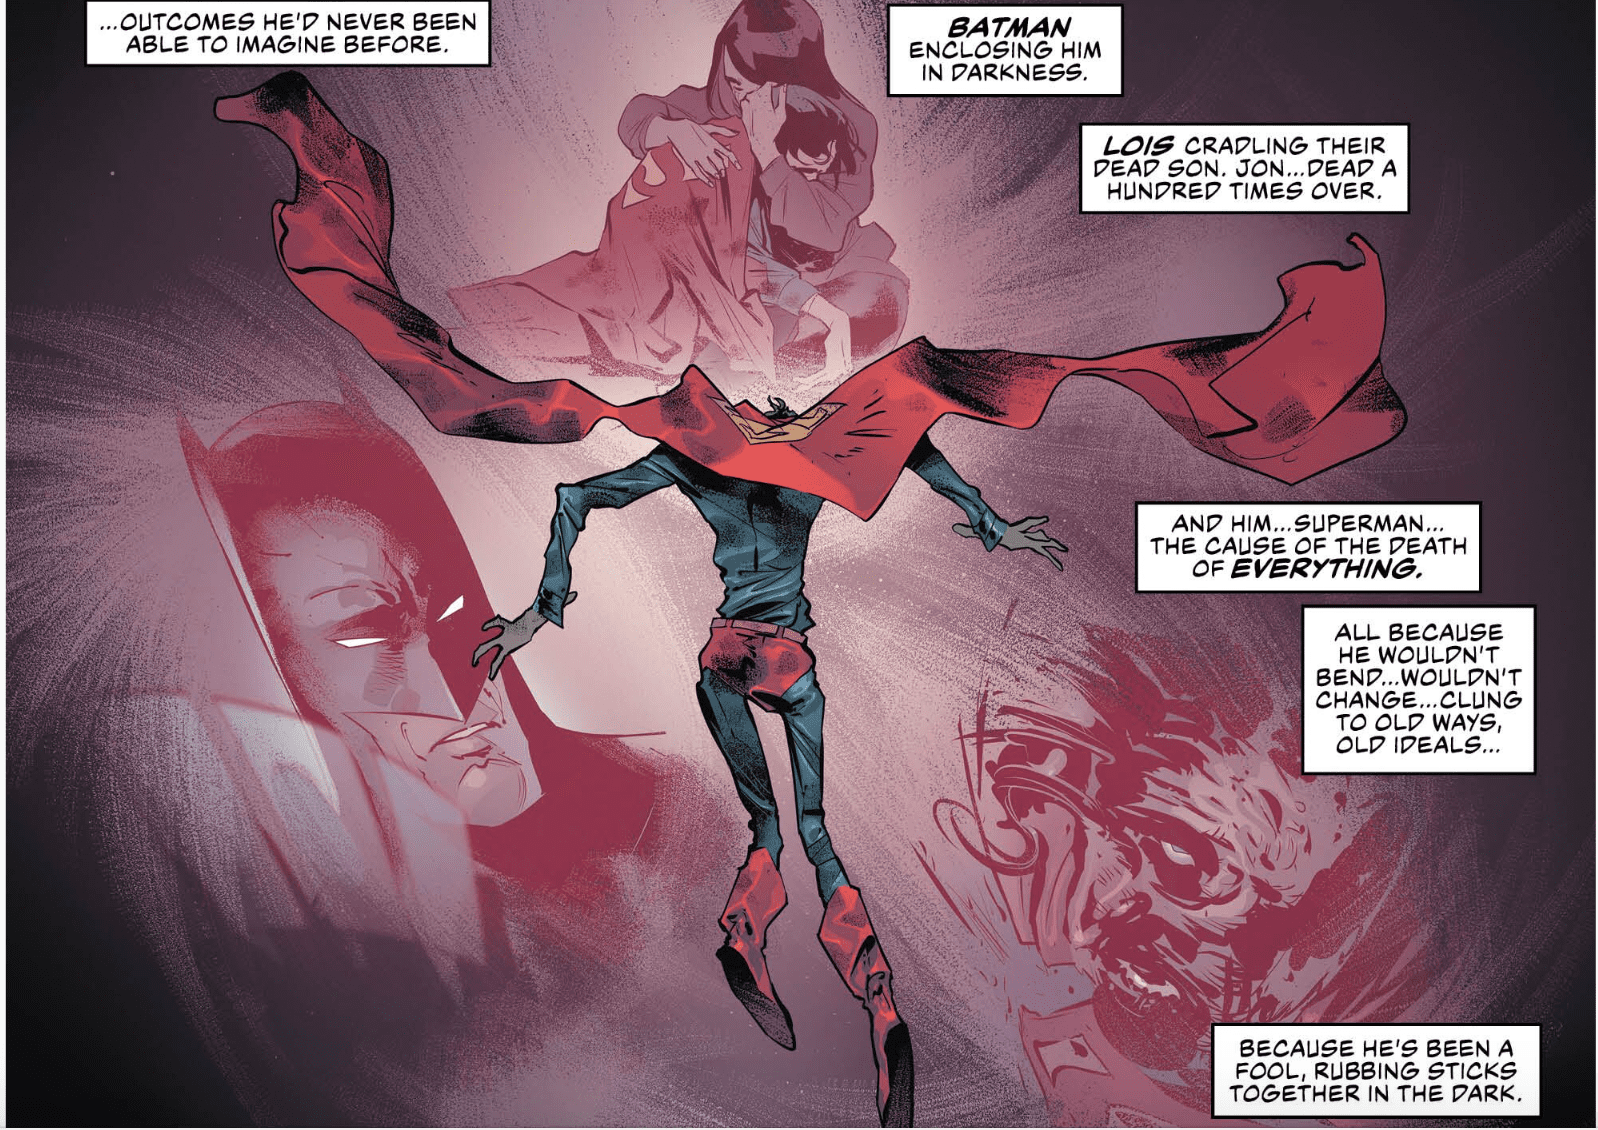 Superman in Justice League #25